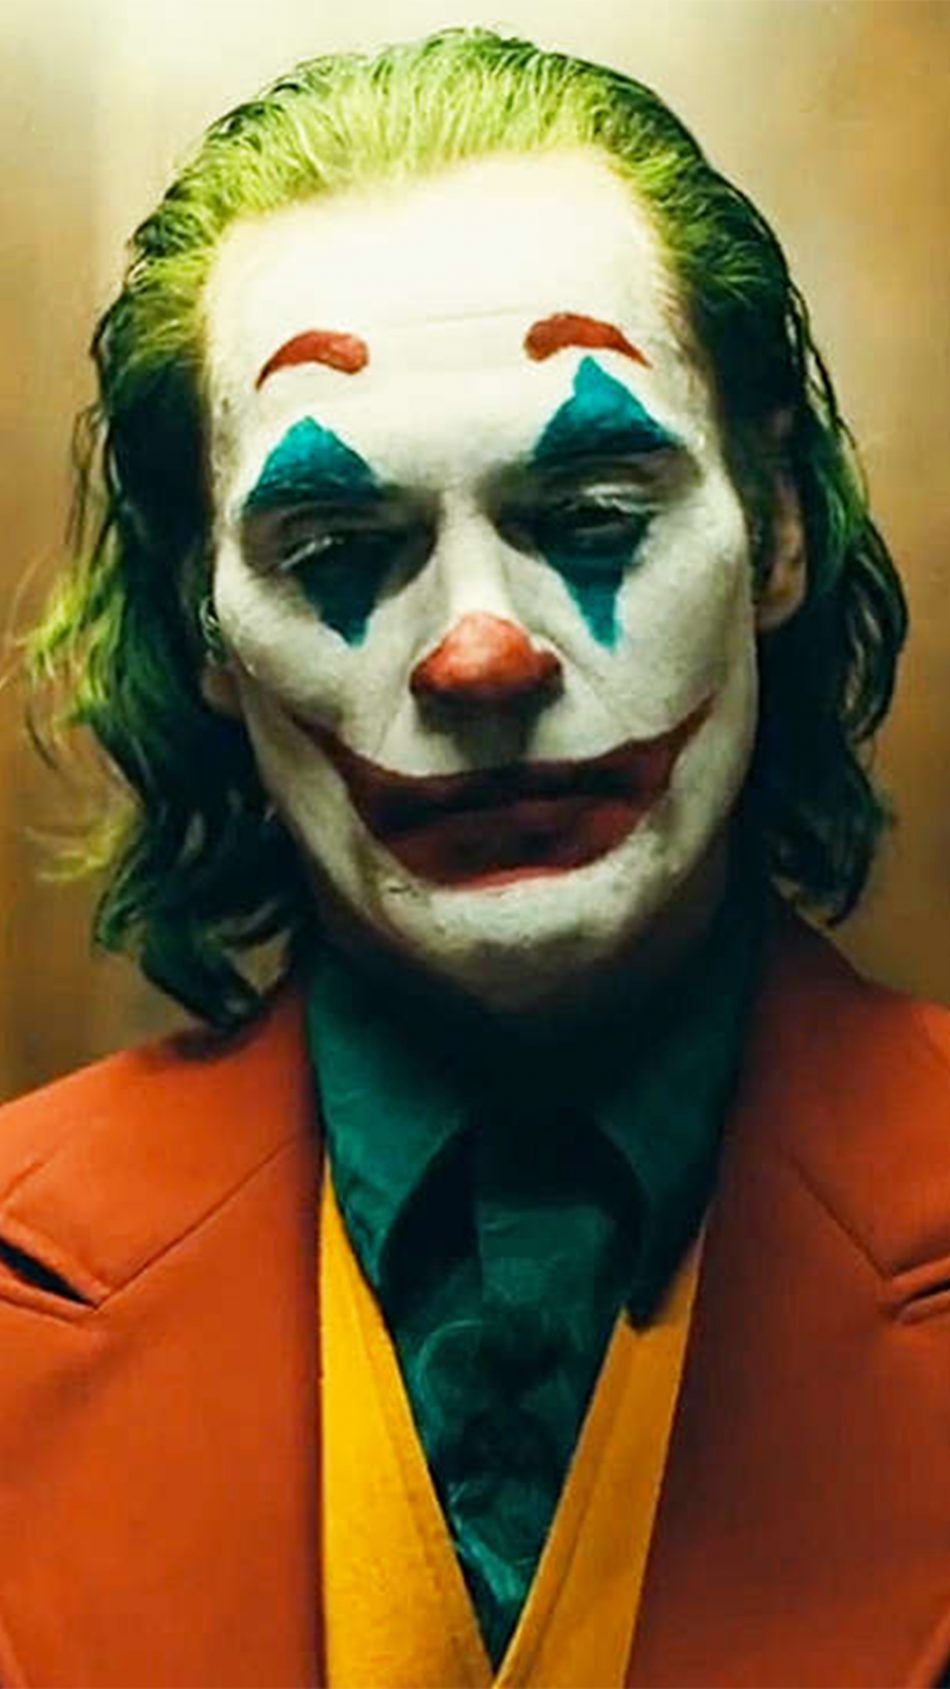 Free download Joker 2019 Wallpapers Top Free Joker 2019 ...